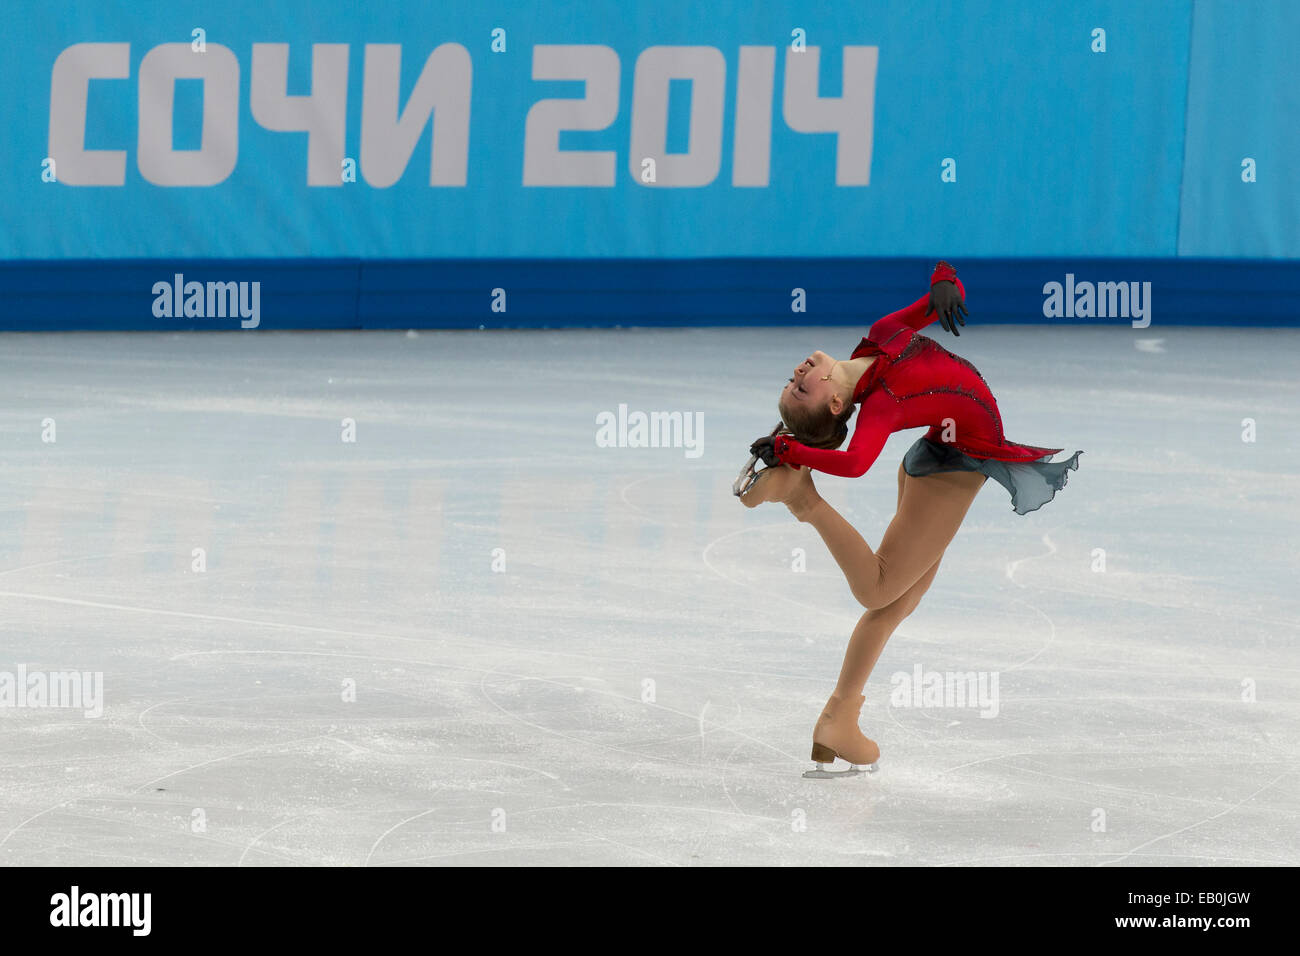 Yulia Lipnitskaya competing in the Figure Skating Free Skate at the Olympic Winter Games, Sochi 2014 Stock Photo